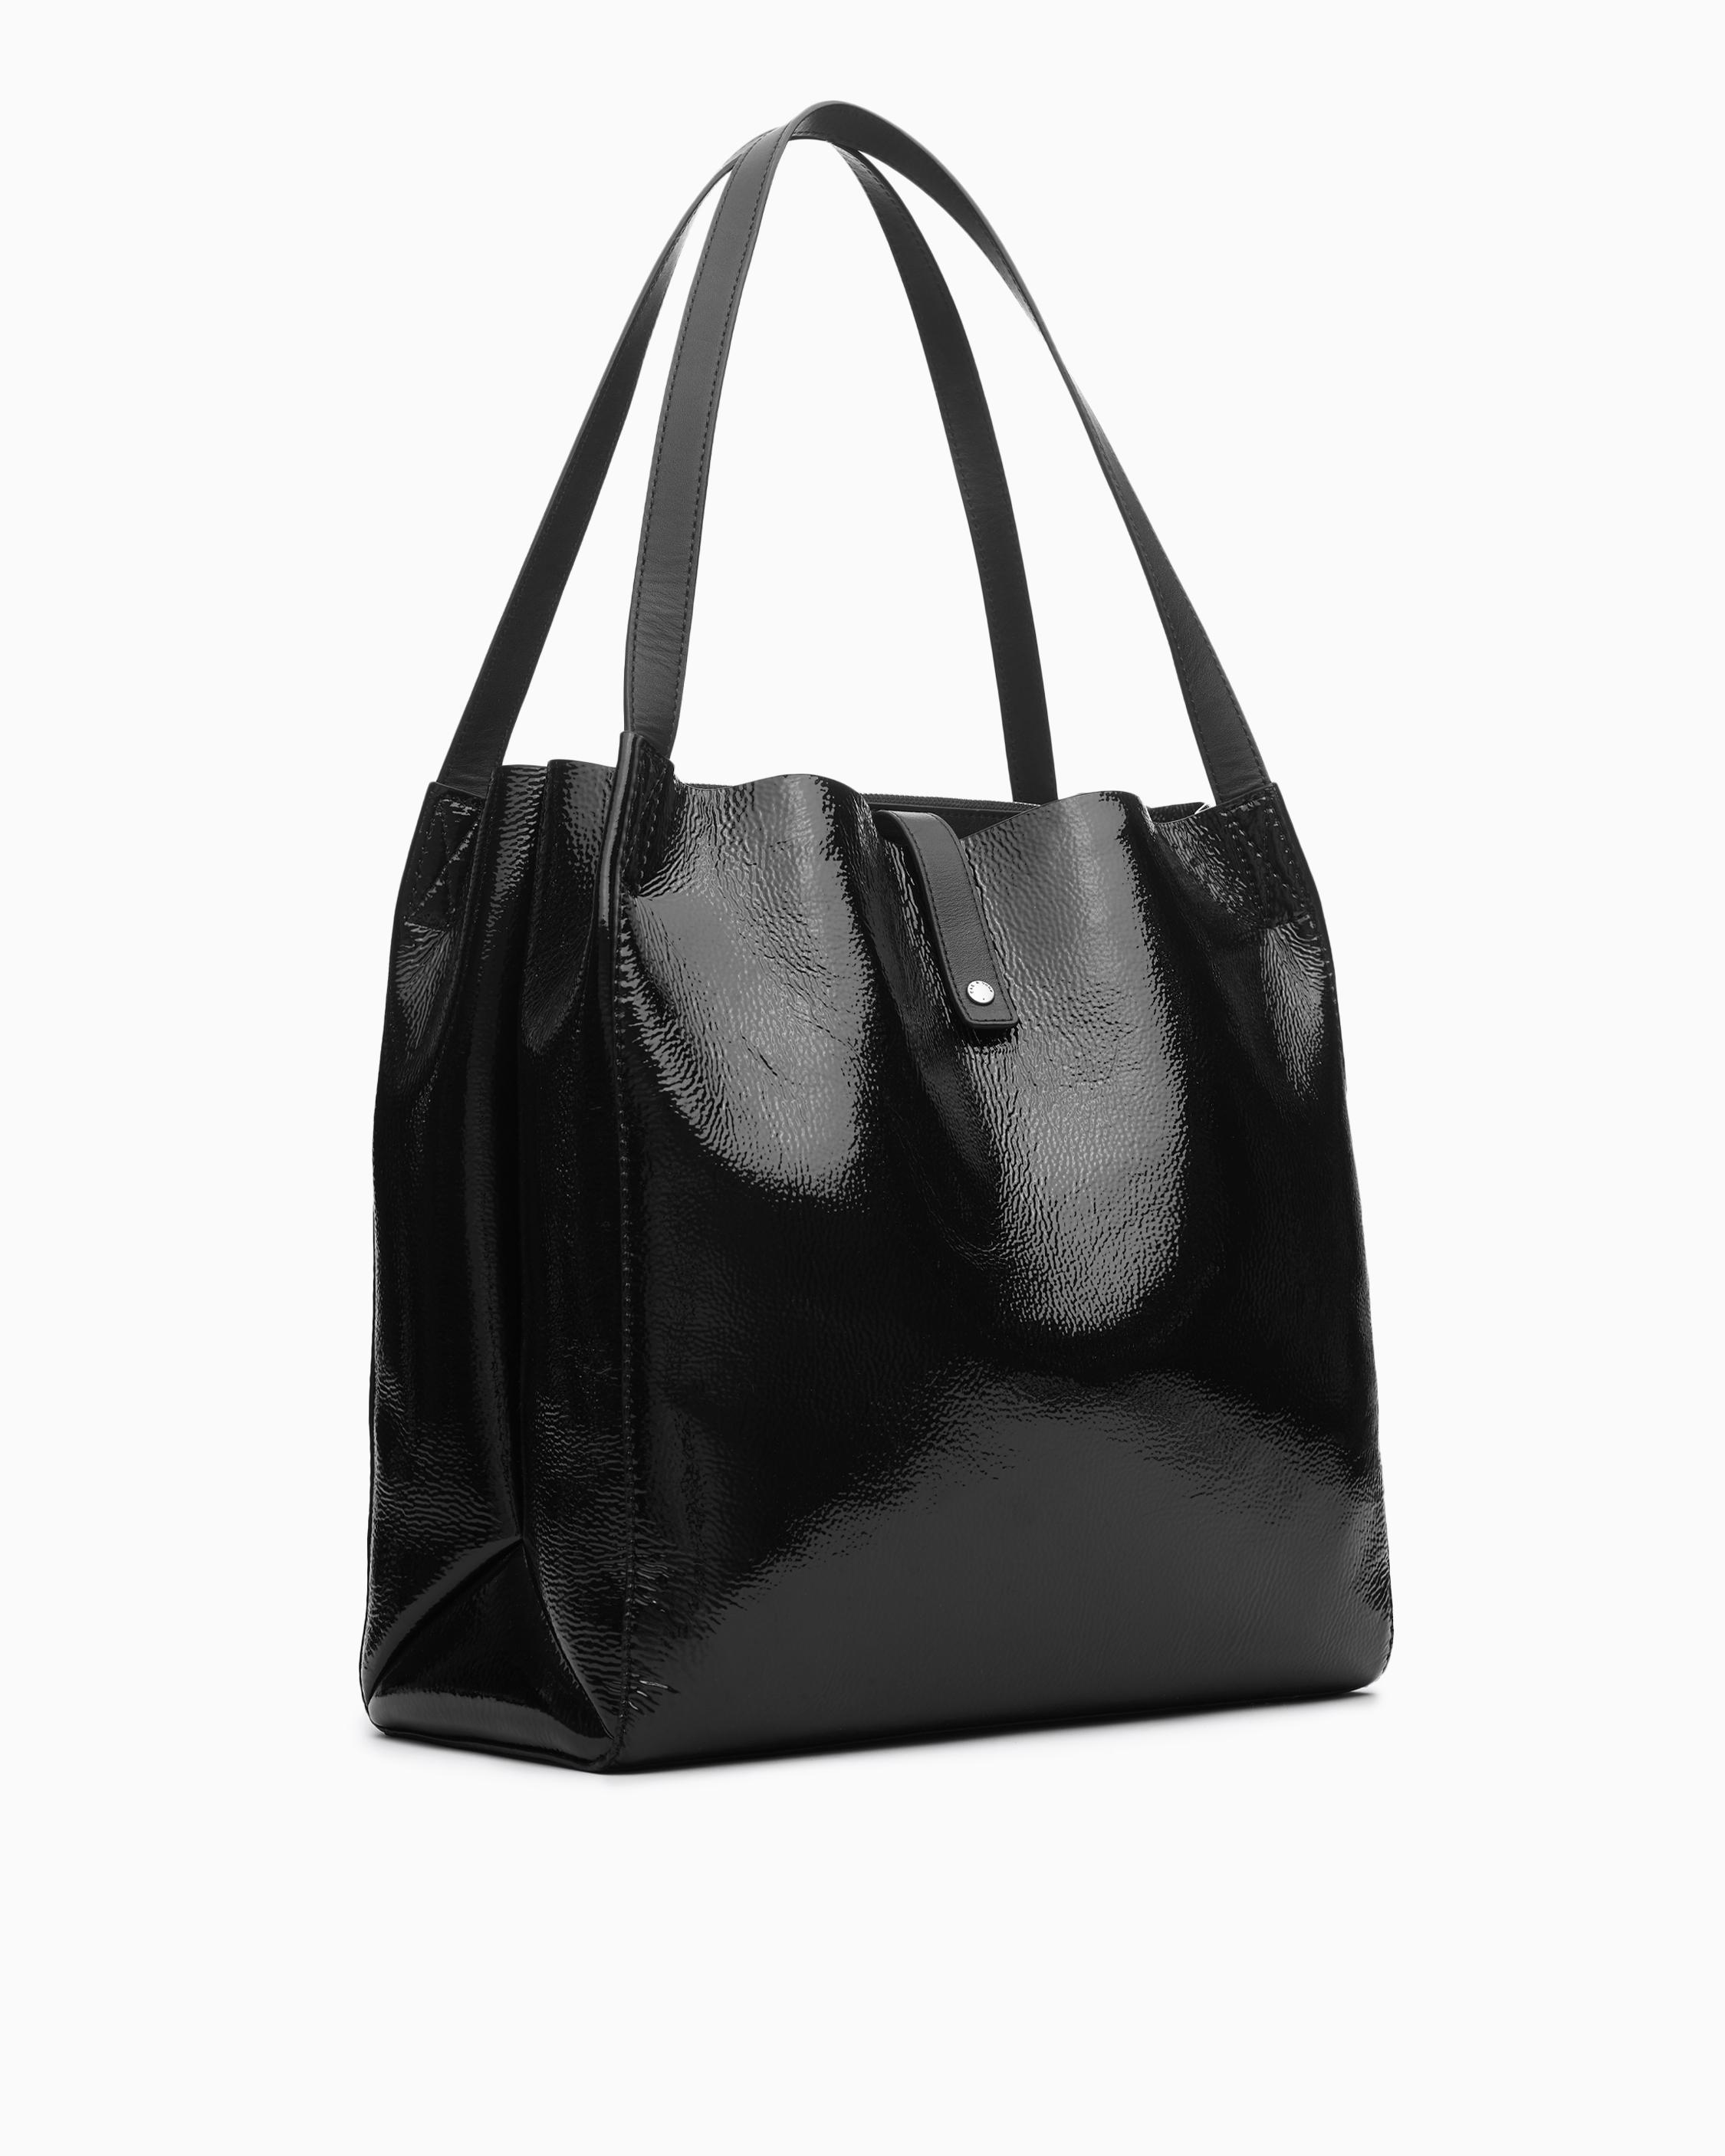 Rag & Bone Passenger Tote - Leather Large Tote Bag in Black